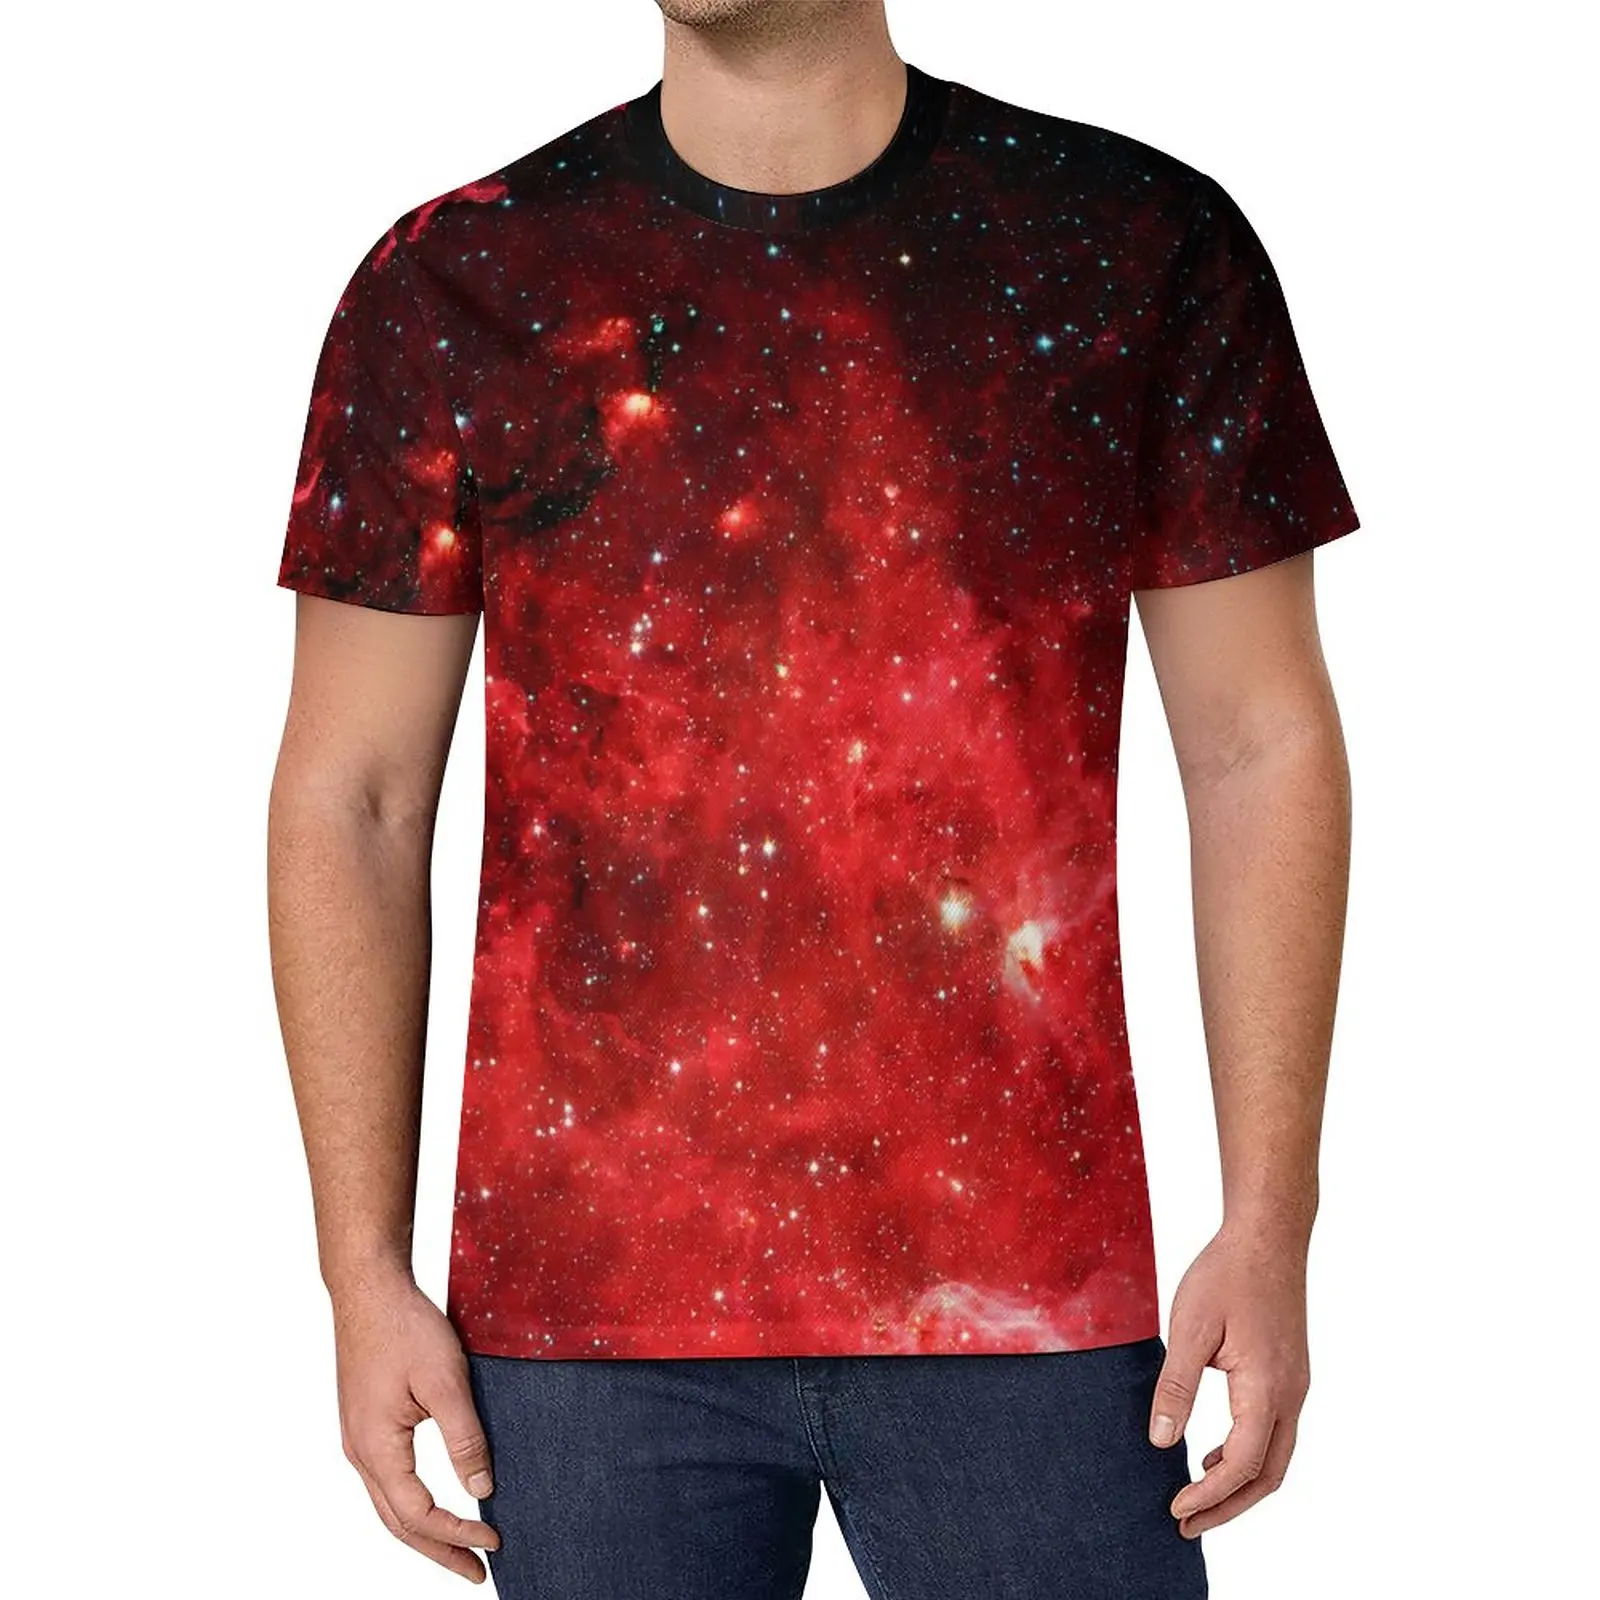 

Galaxy T-Shirt North America Nebula Vintage T-Shirts Summer Pattern Tees Kawaii Tops Plus Size 6XL